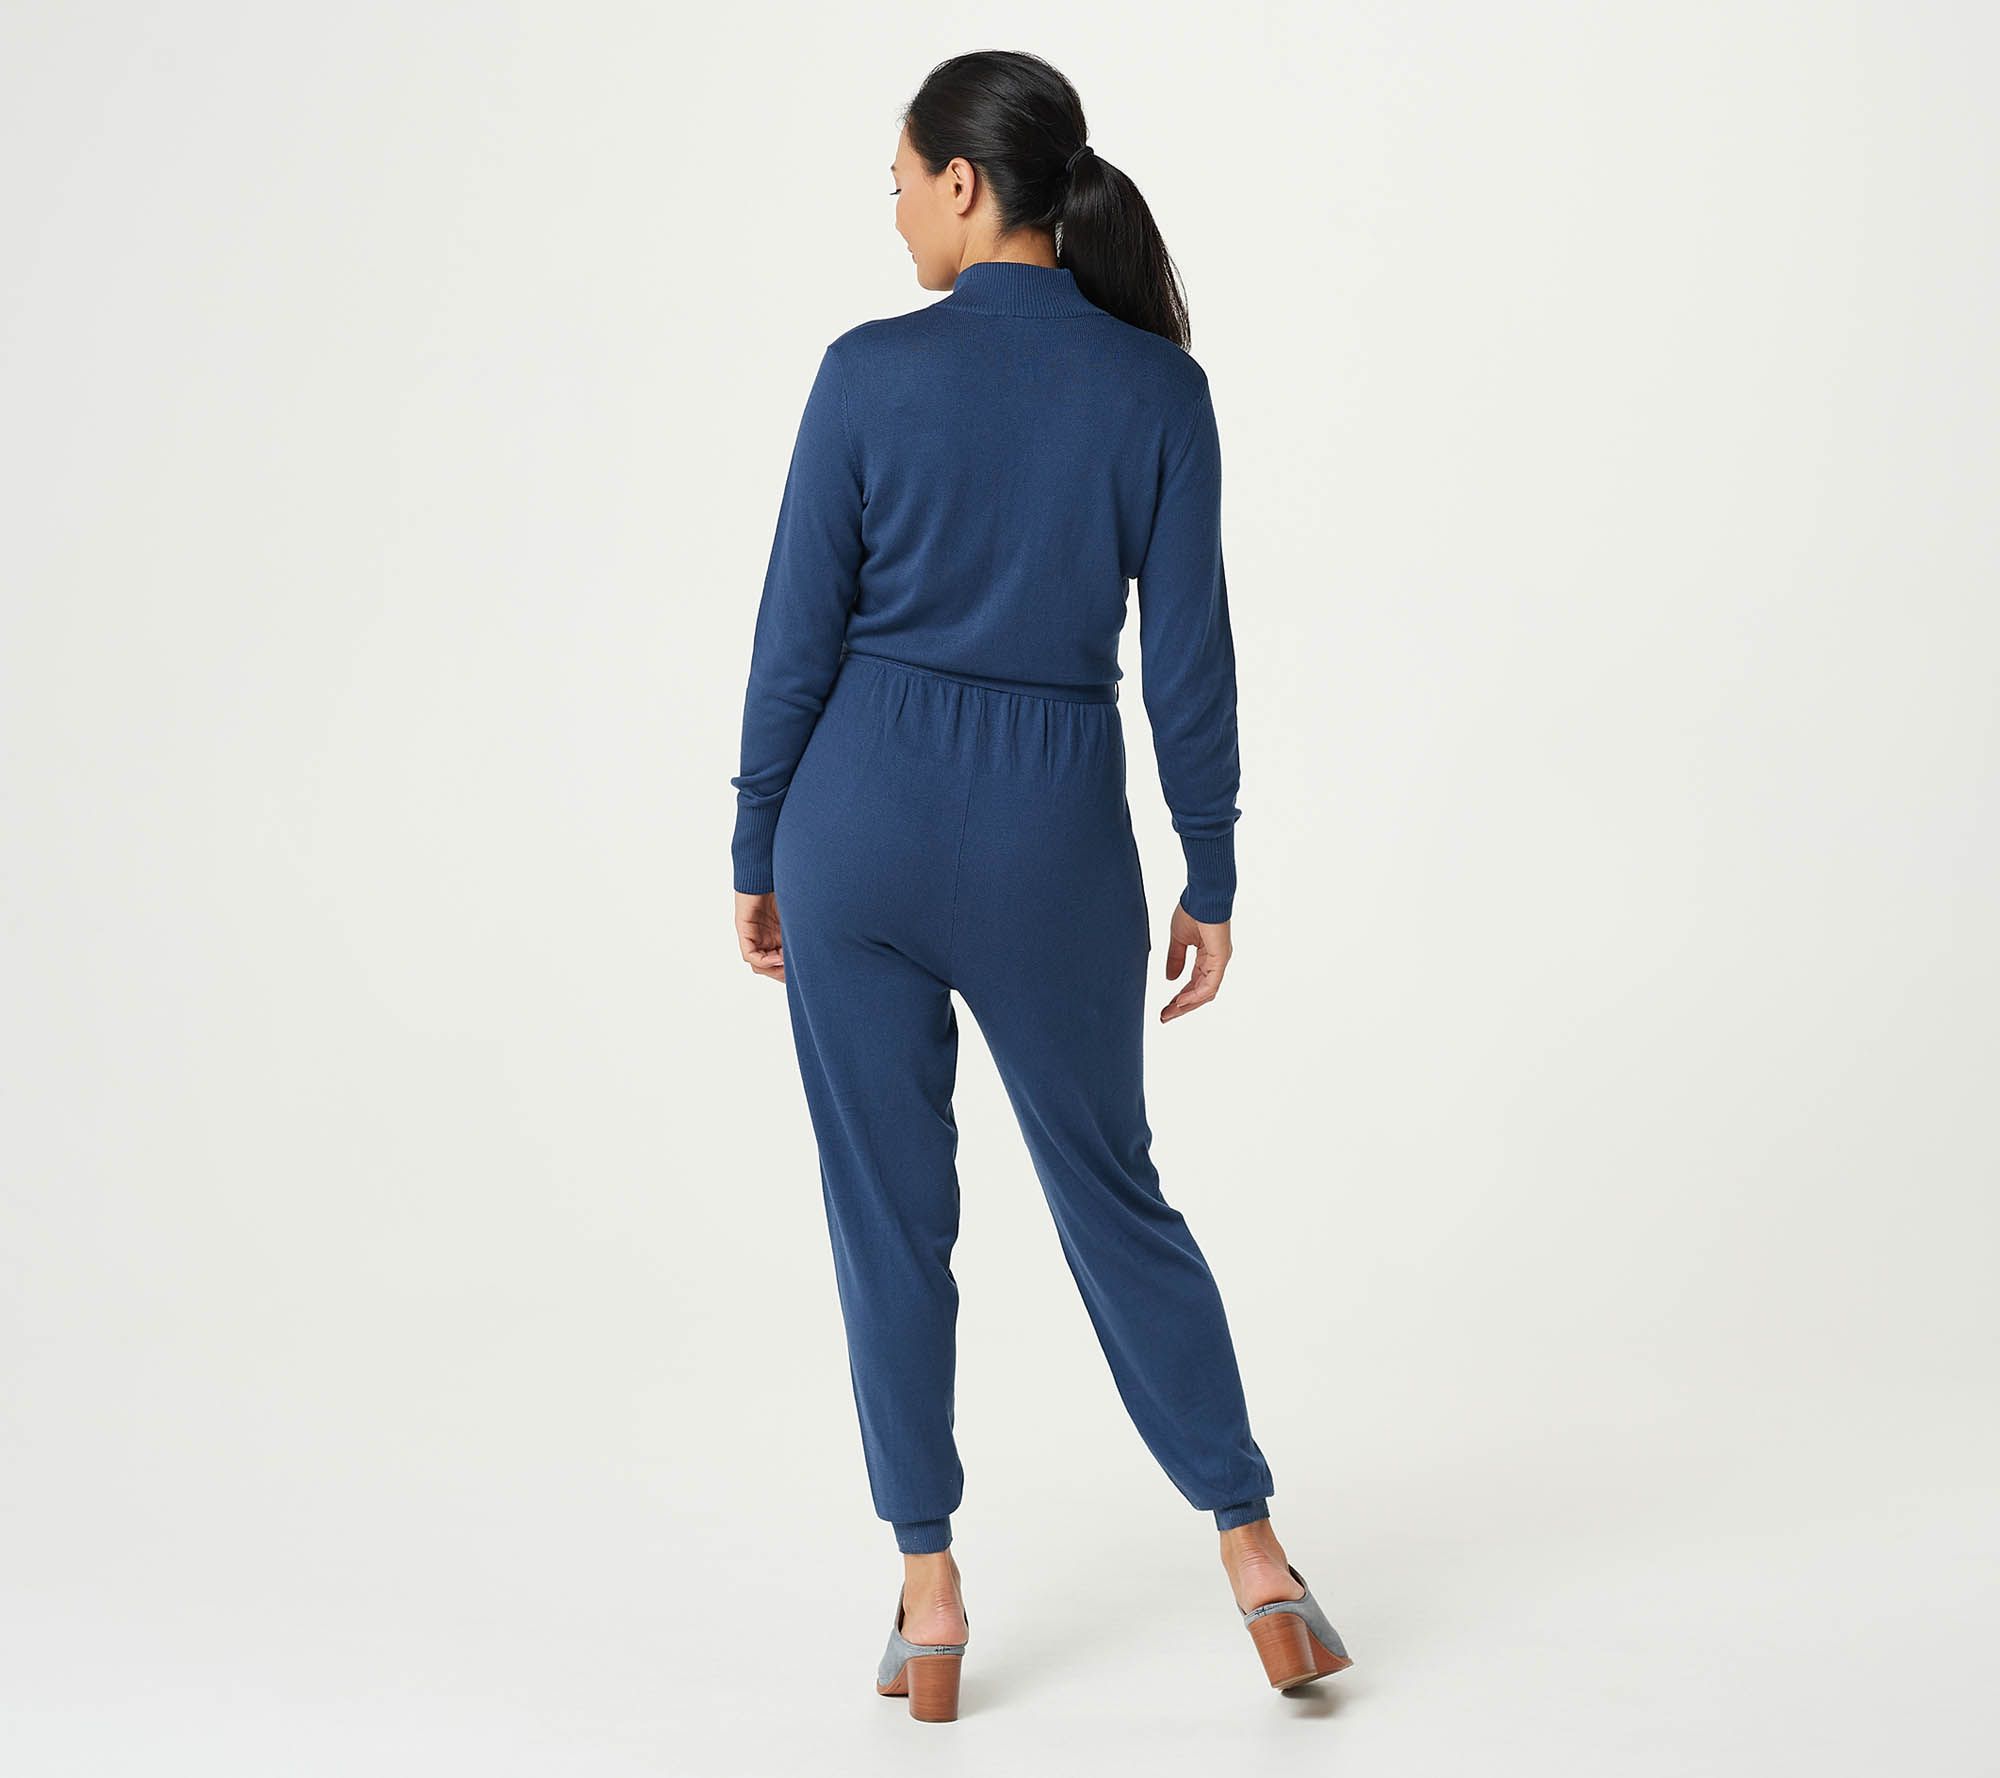 zuda Sweater Jumpsuit with Belt - QVC.com